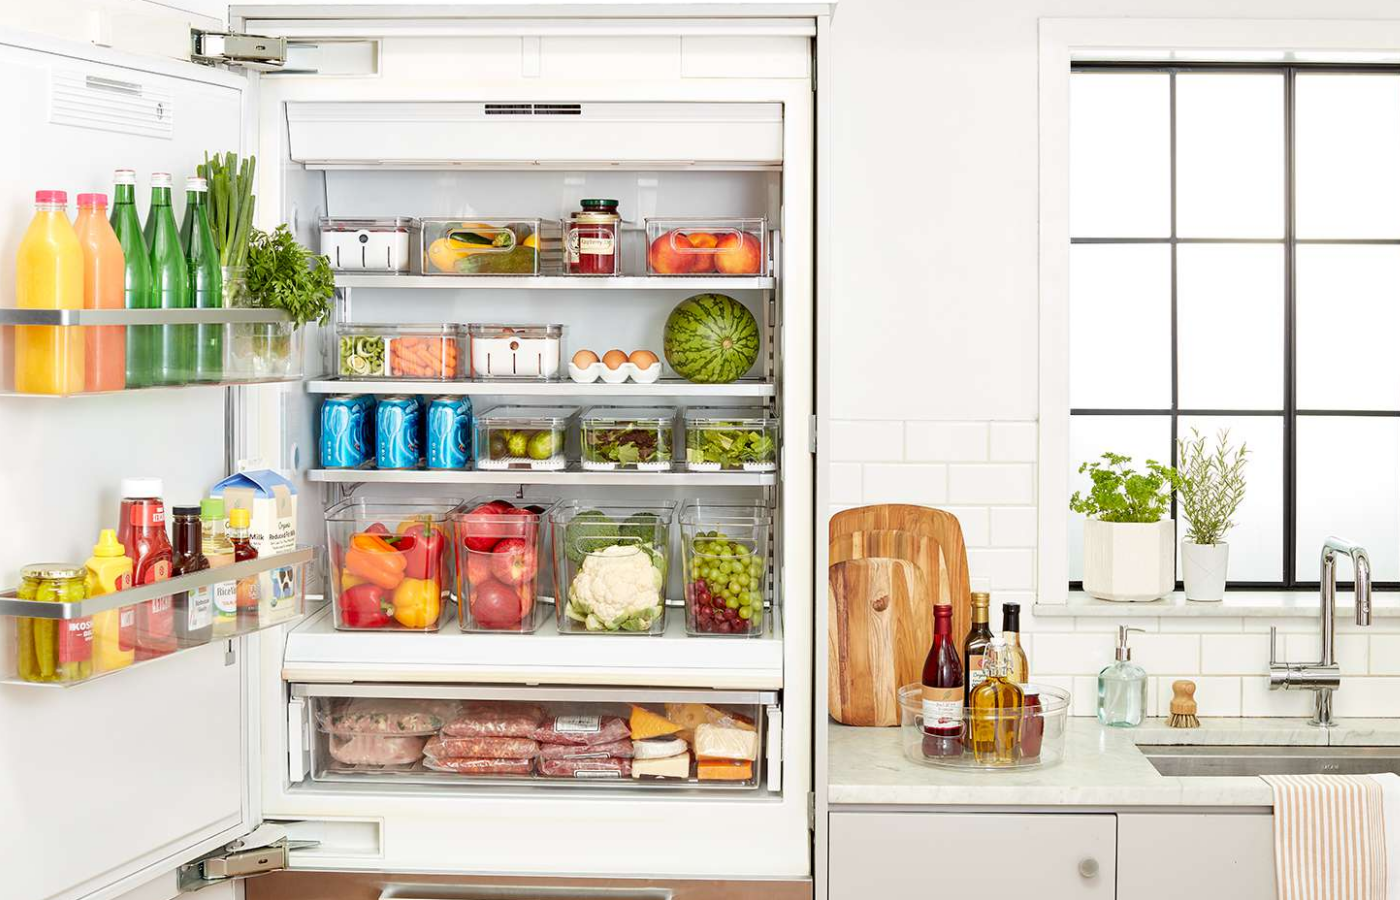 Organizing Your Refrigerator for Maximum Efficiency